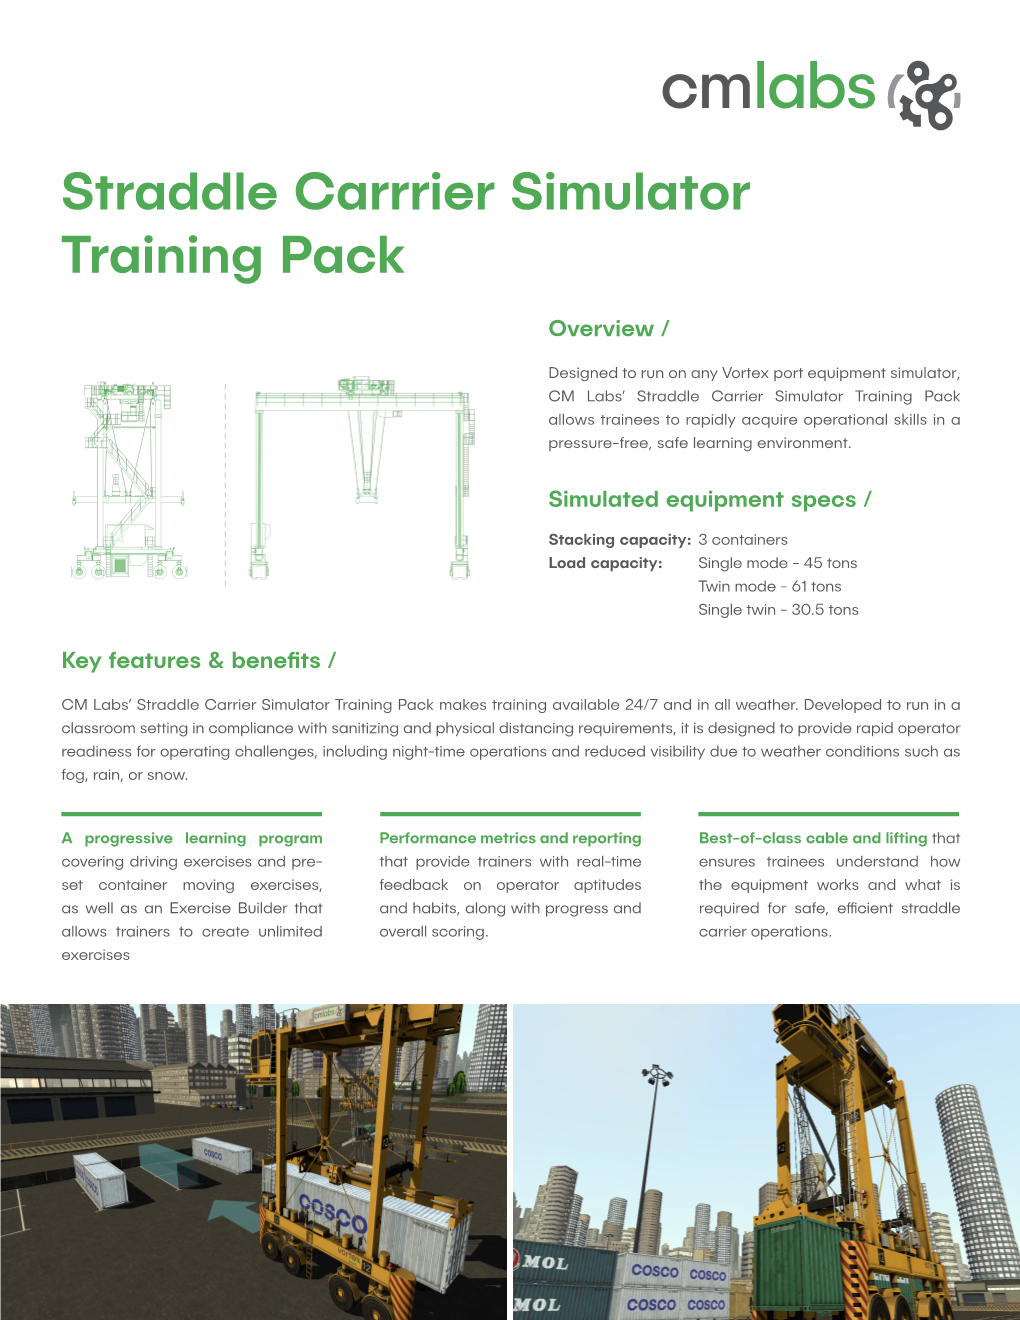 Straddle Carrrier Simulator Training Pack